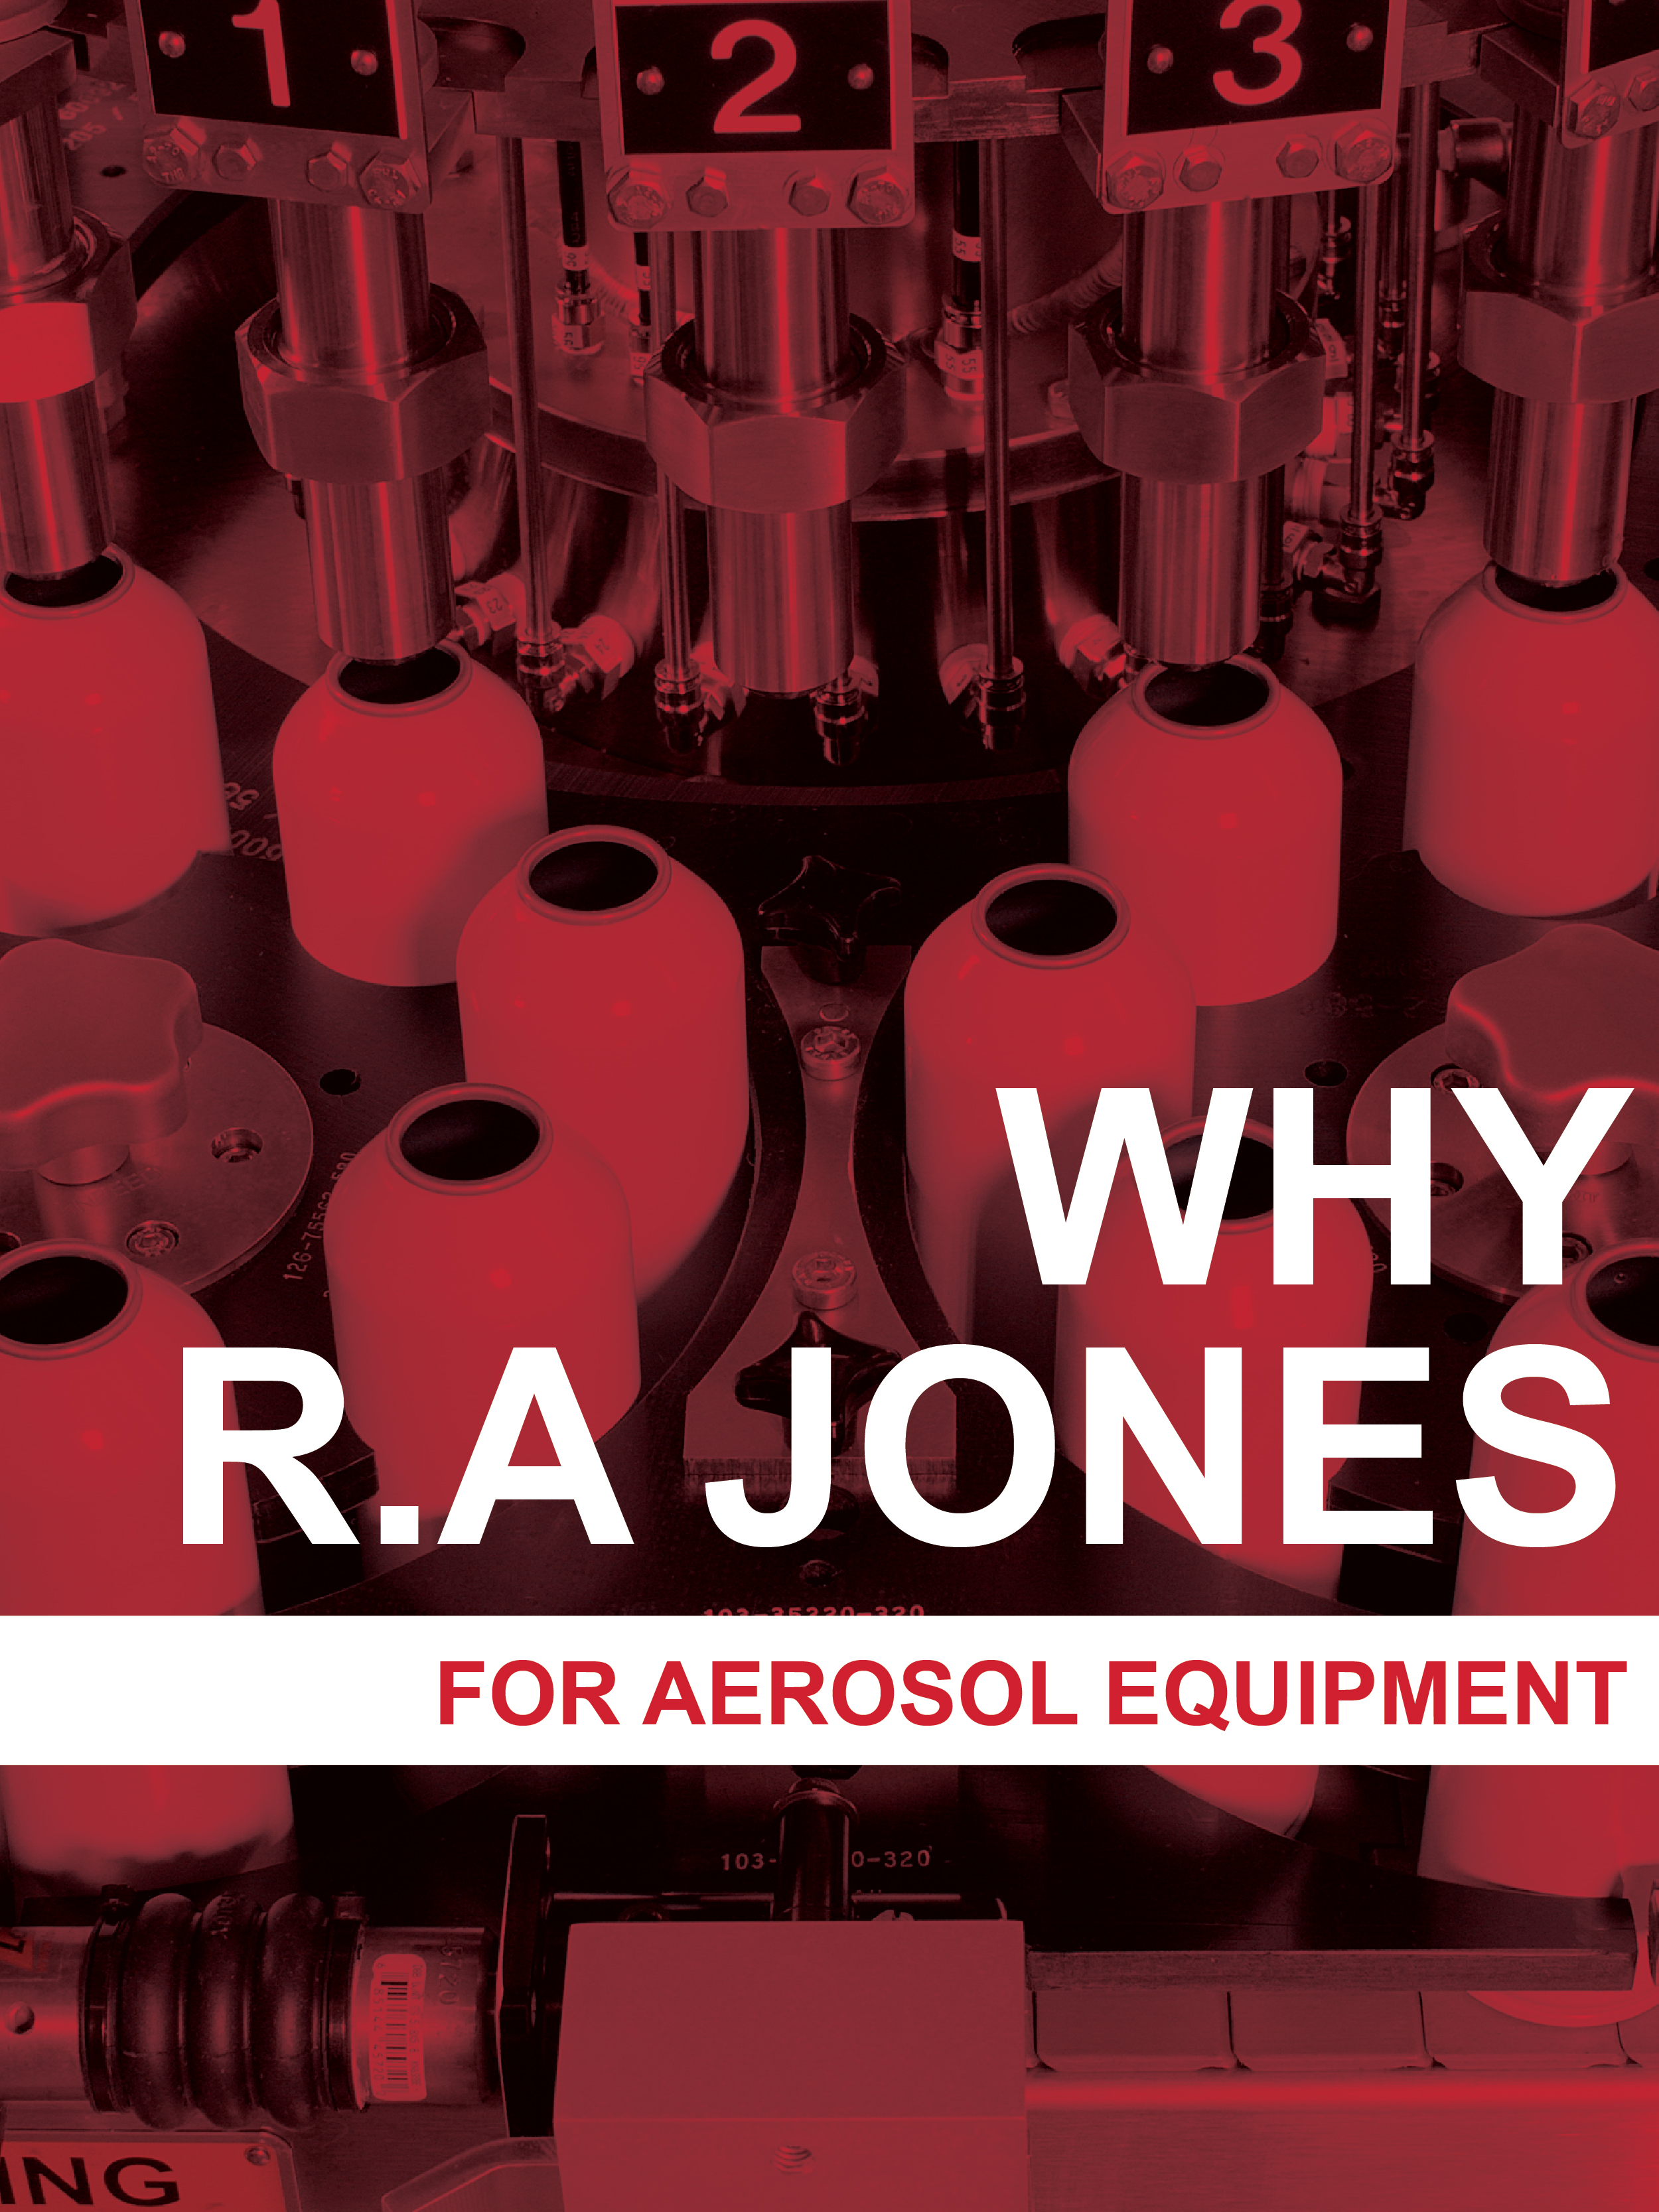 Kp-Aerofill Aerosol Equipment R.A Jones